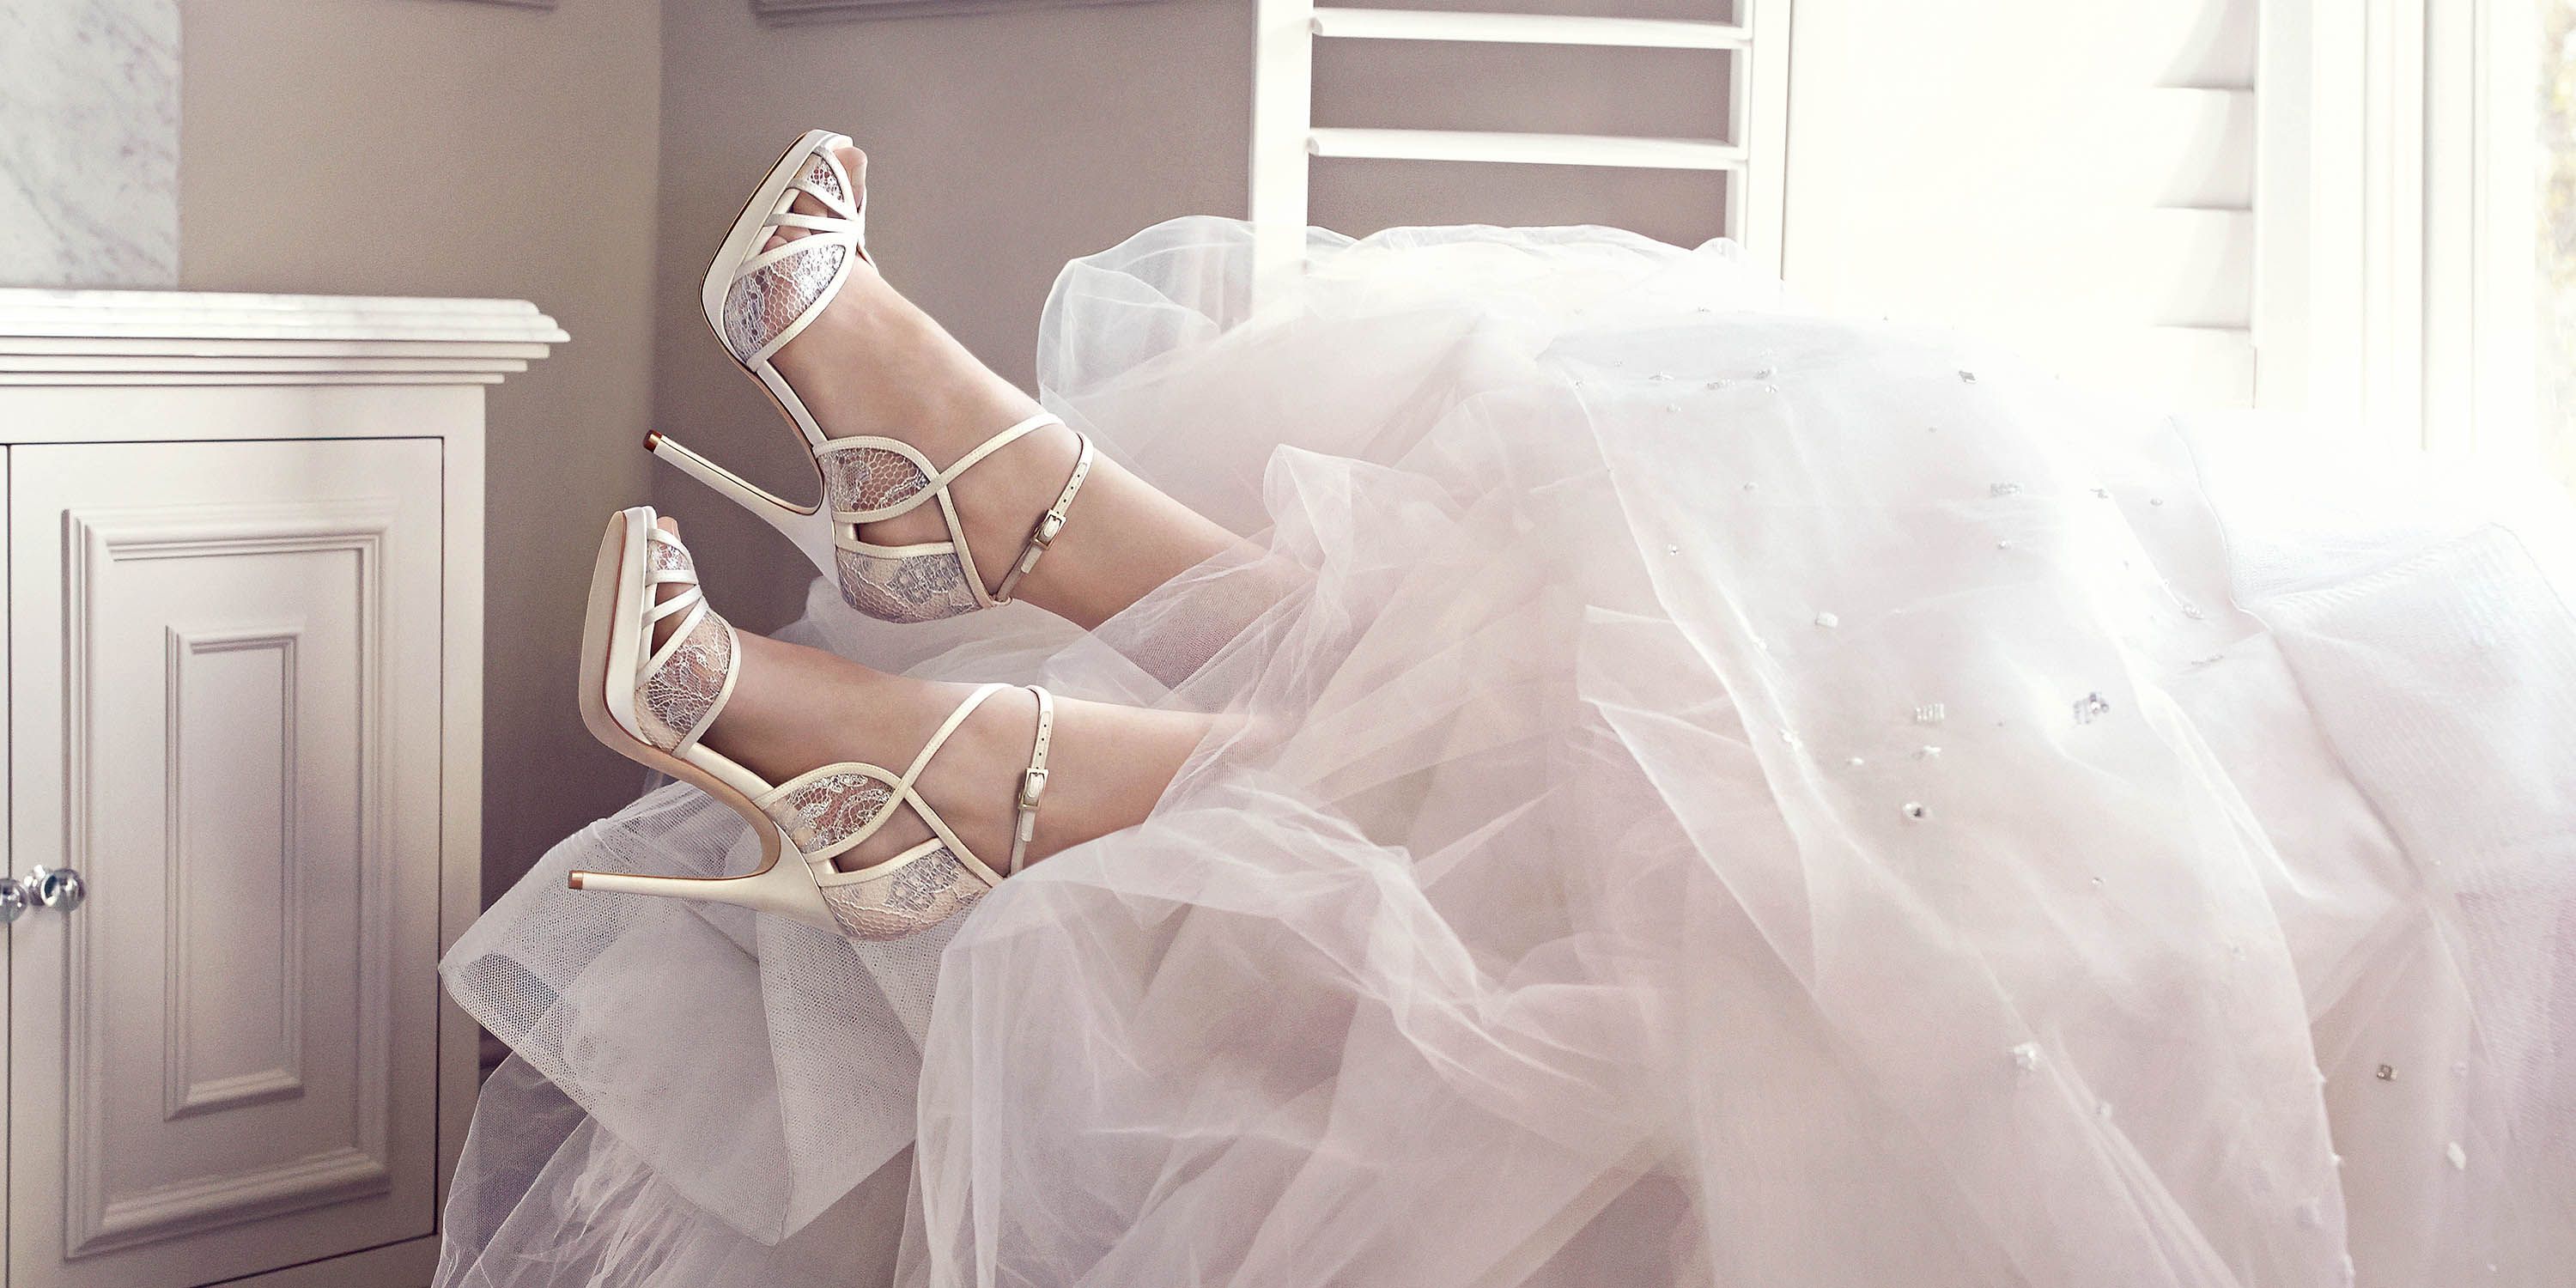 Jimmy Choo Wedding Shoes to Help You Slay the Wedding Looks